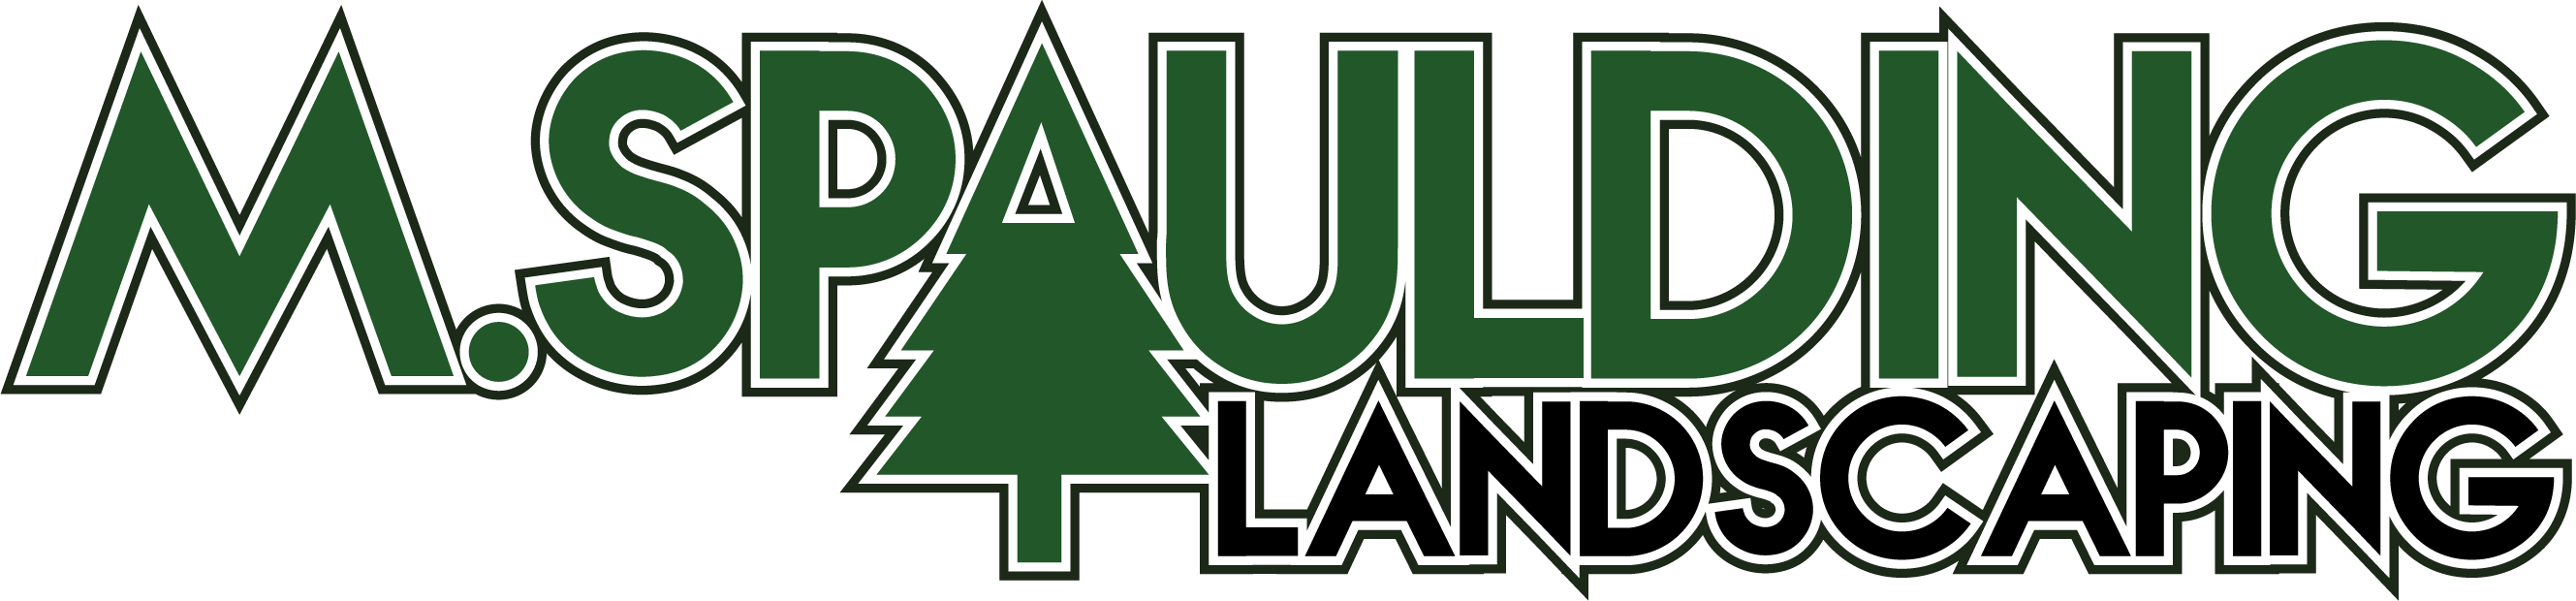 M. Spaulding Landscaping LLC Logo